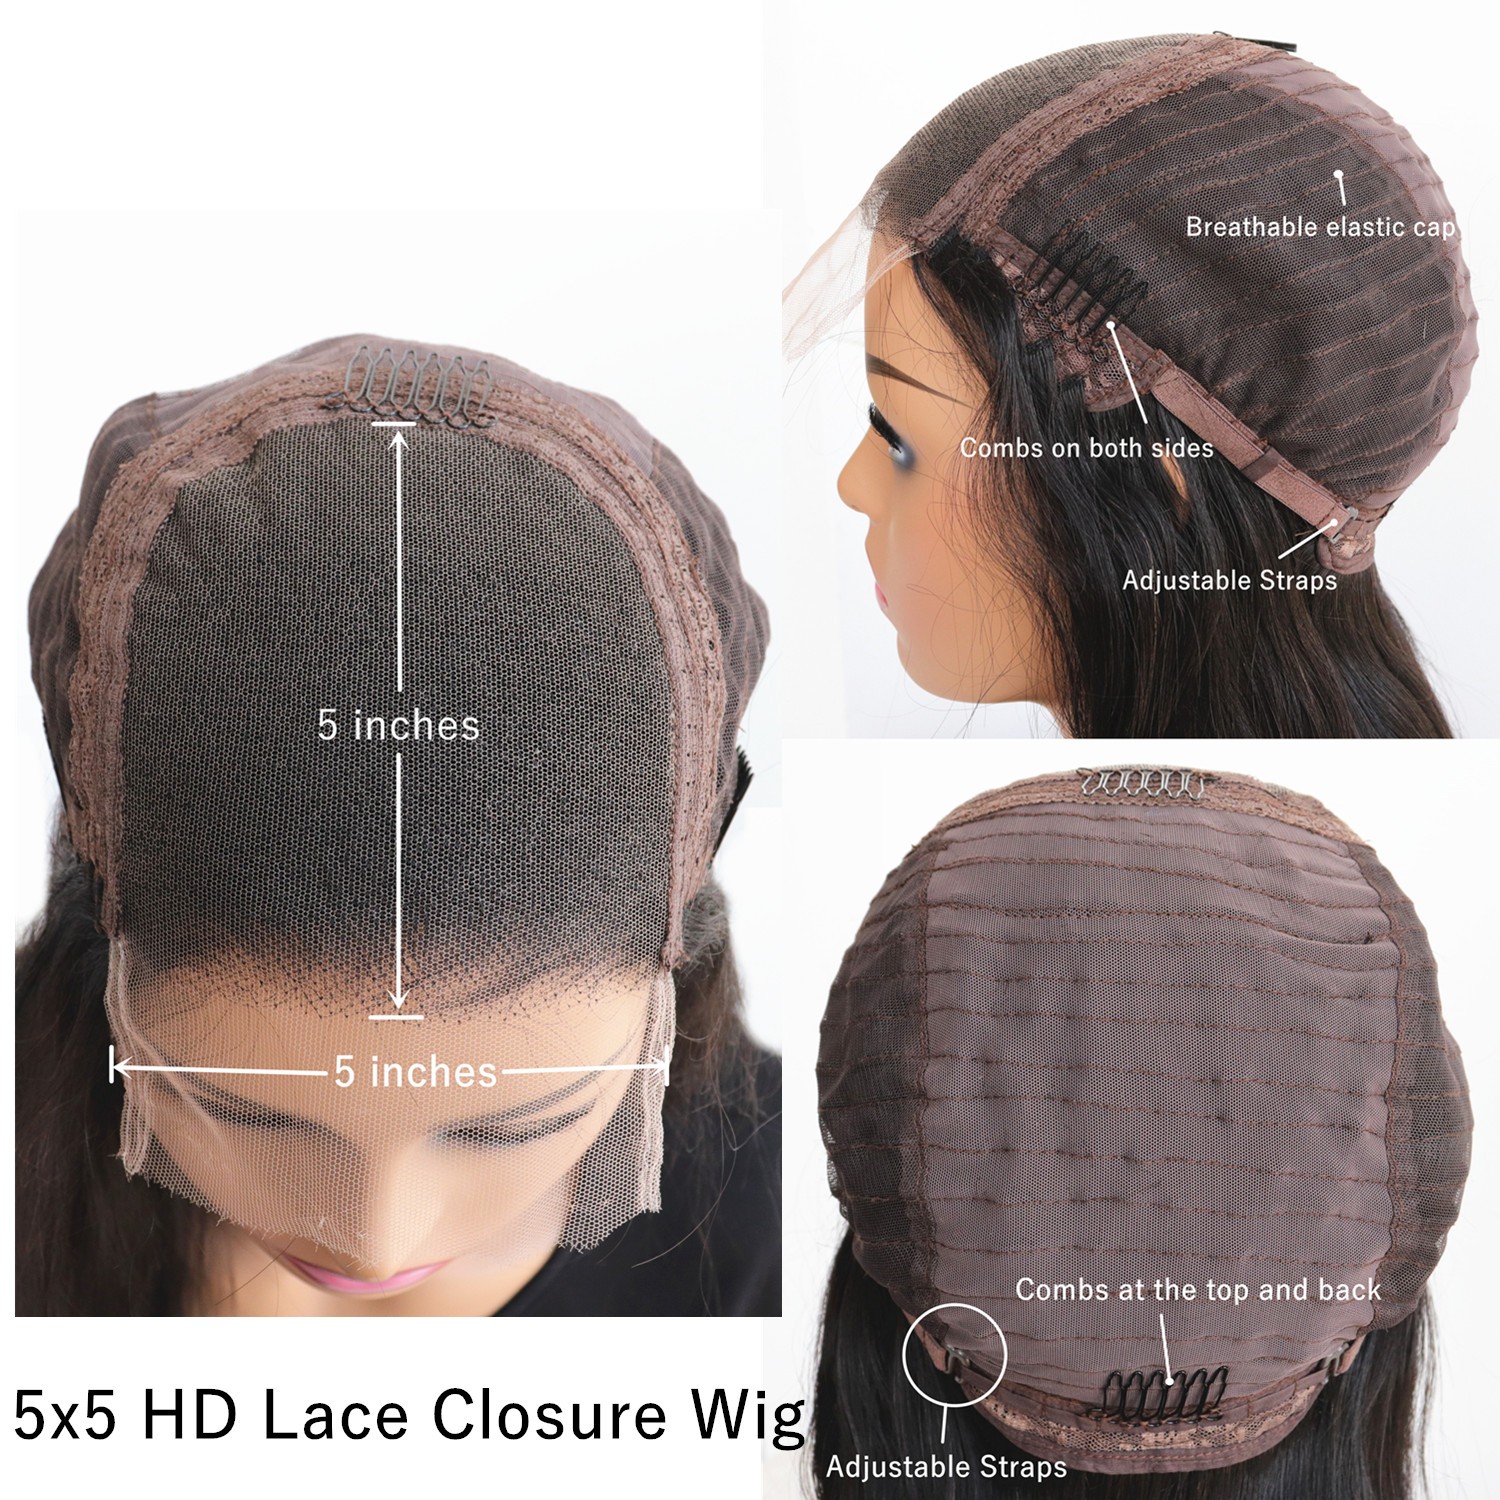 5x5 hd lace wig